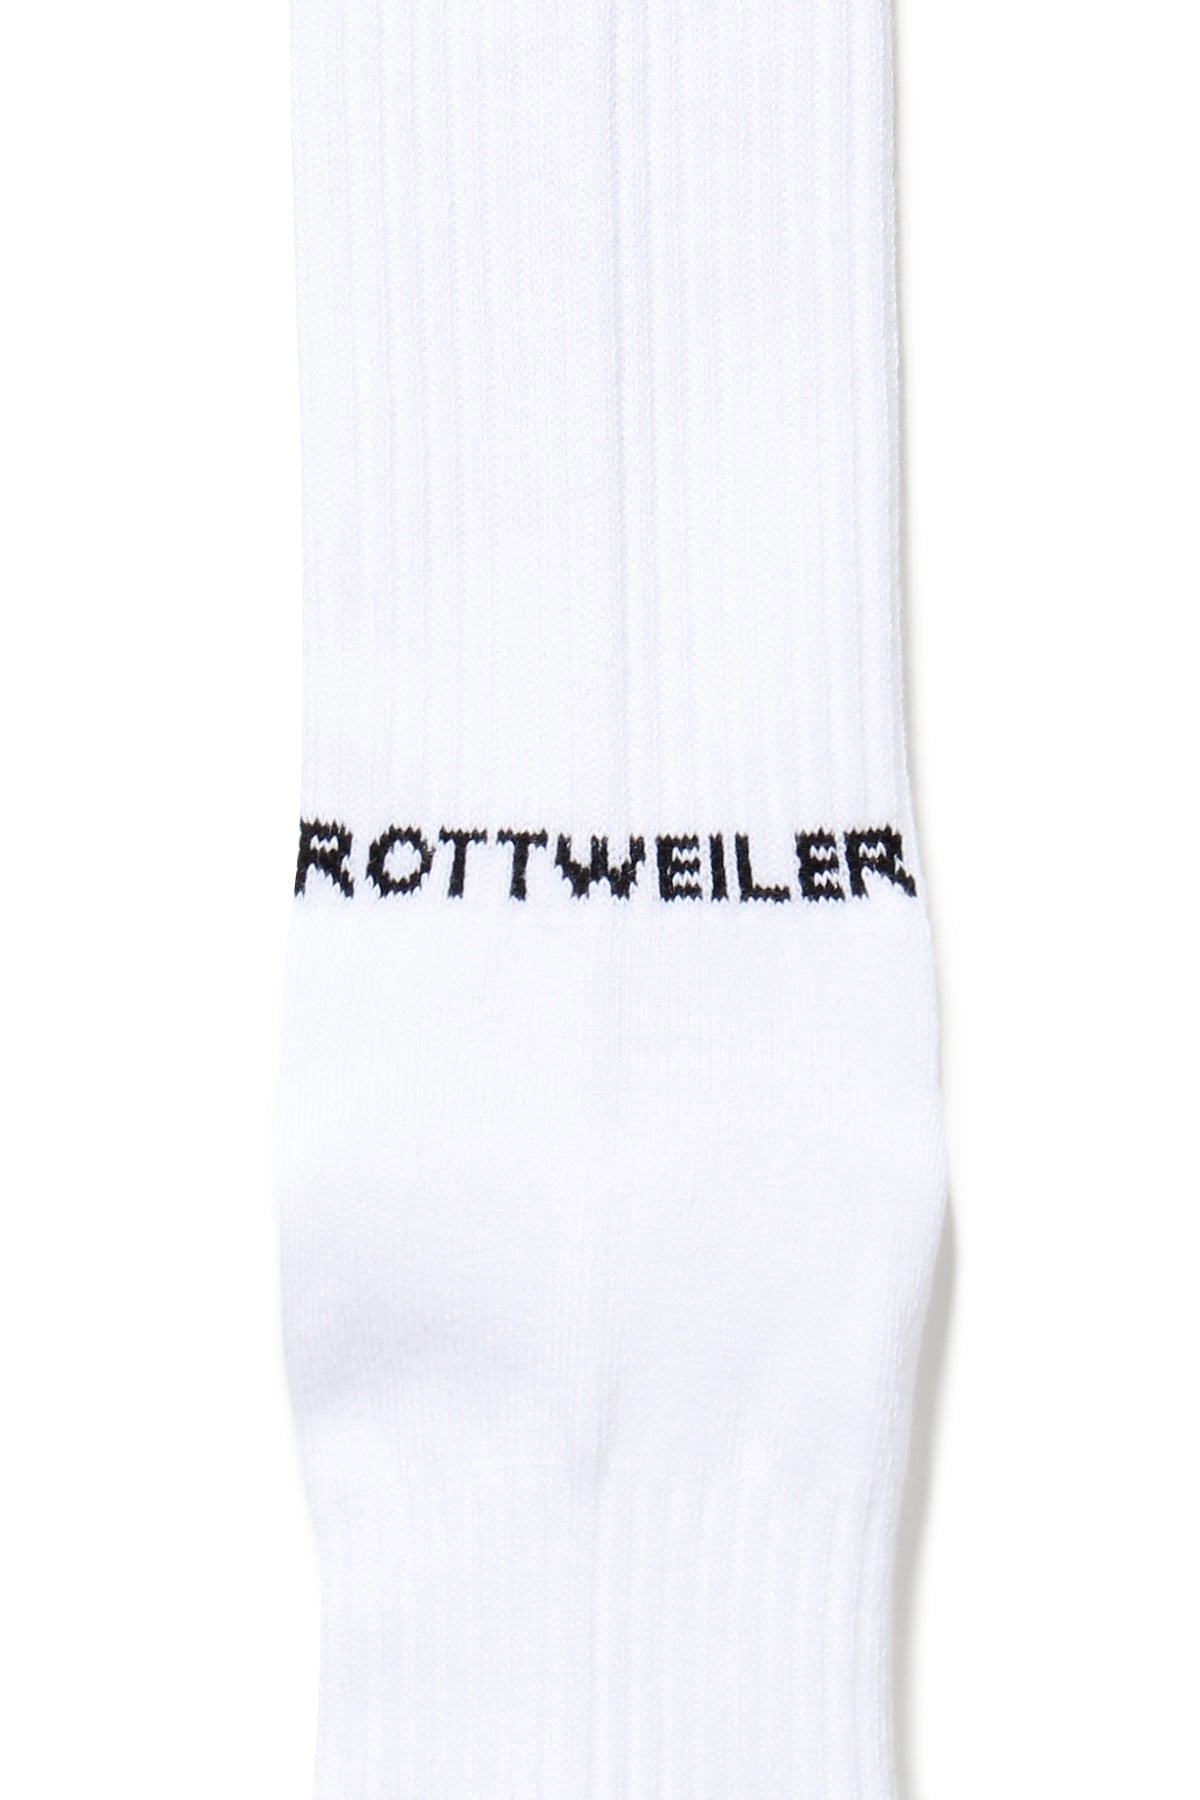 ROTTWEILER ×  PURPLES  collaboration socks